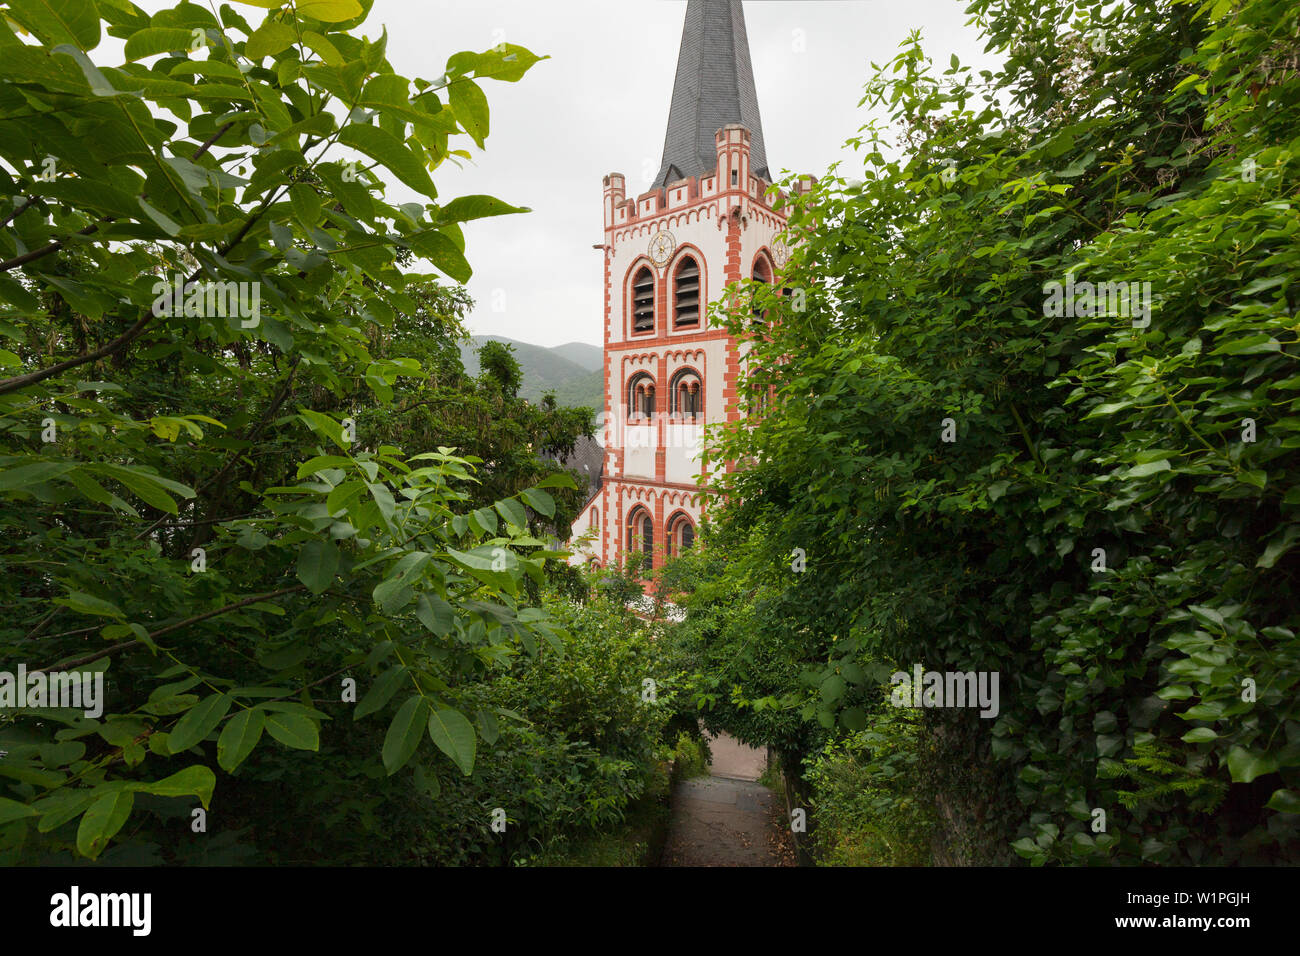 St. Peters church, Bacharach, Rhine river, Rhineland-Palatinate, Germany Stock Photo